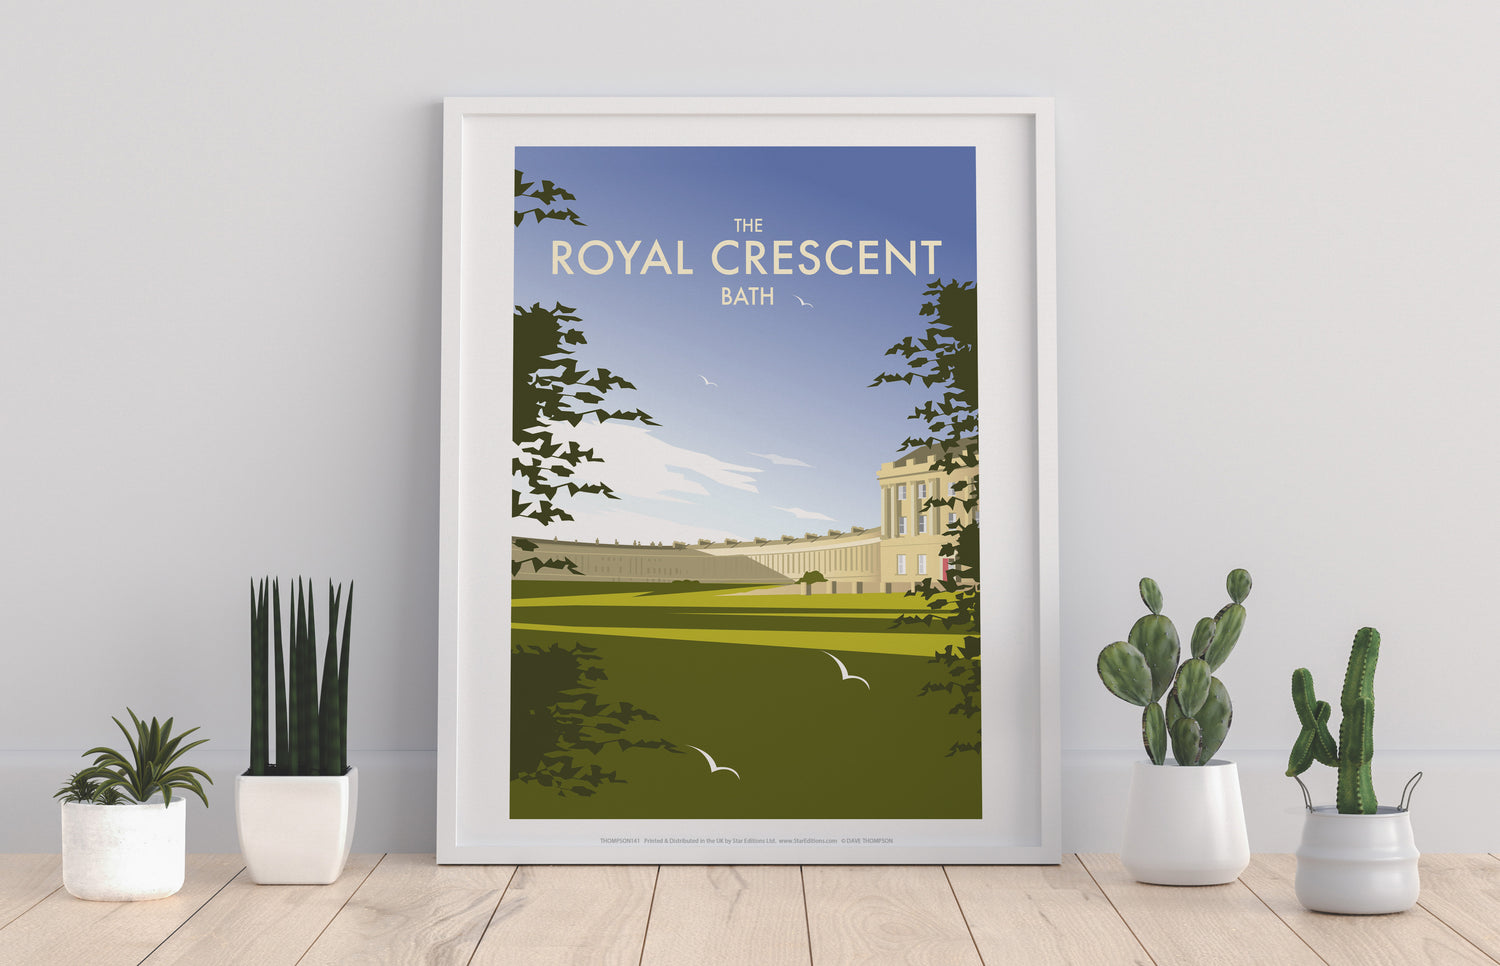 The Royal Crescent, Bath - Art Print